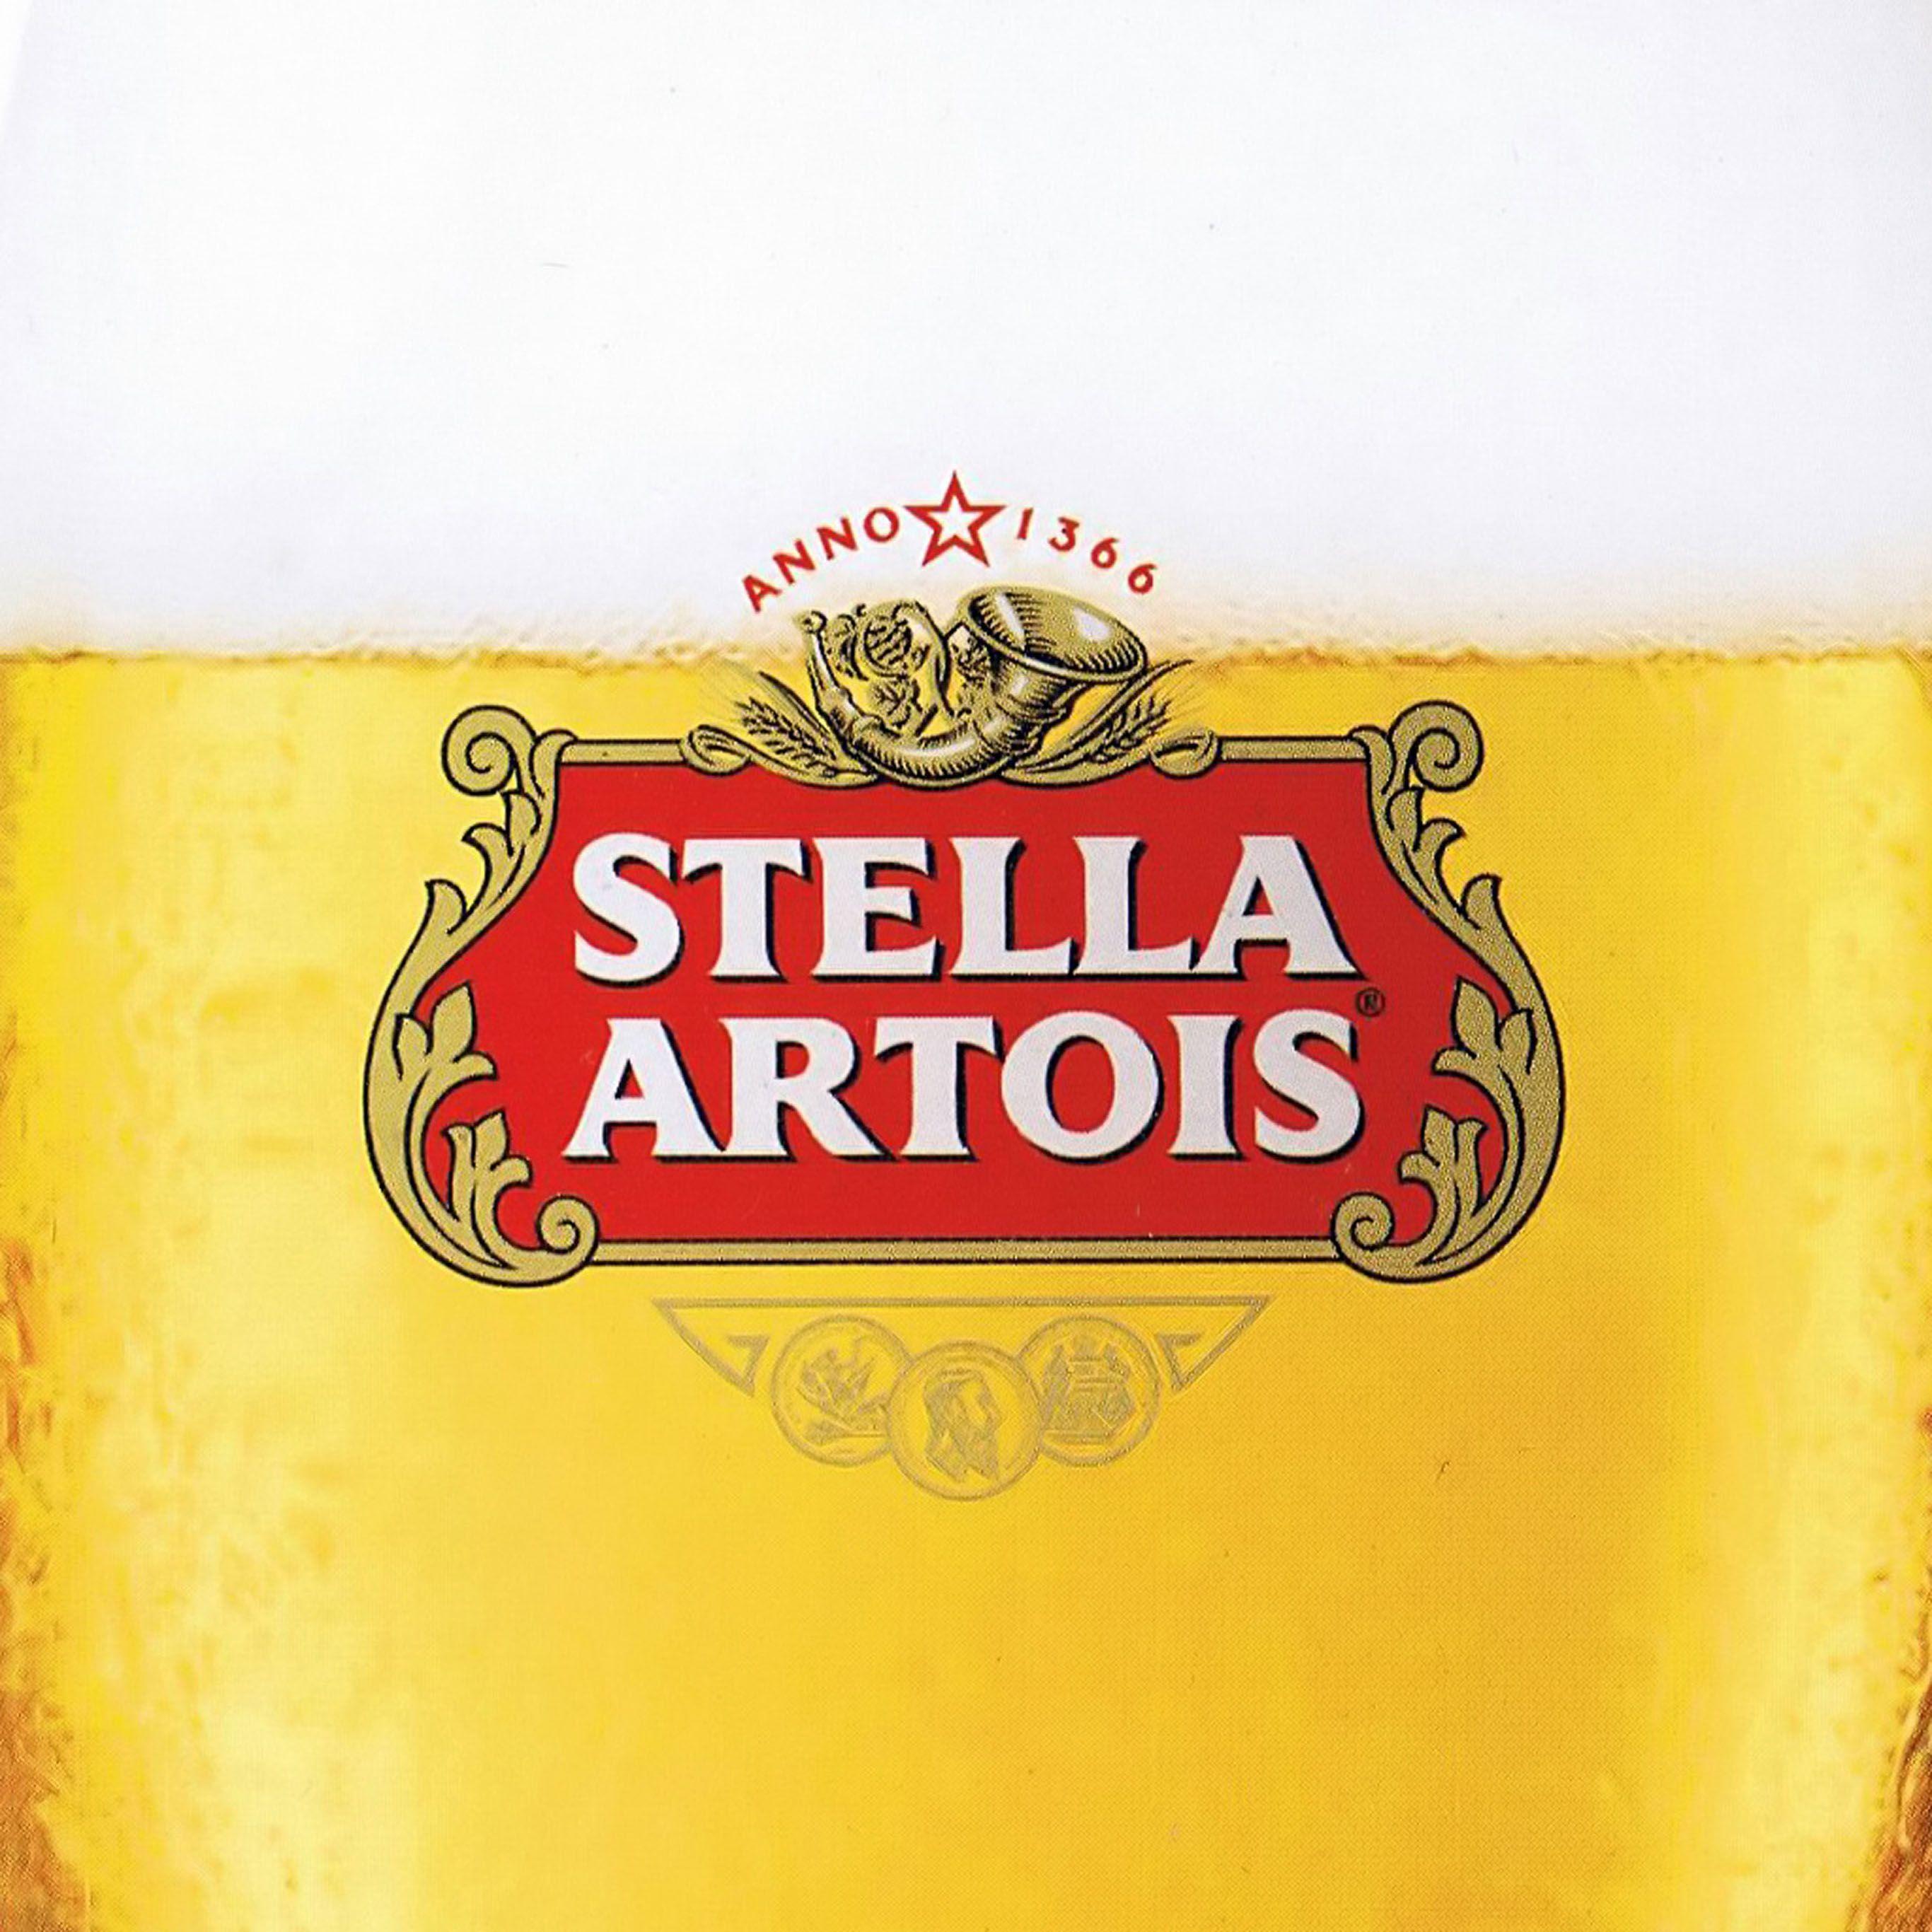 Mobile Stella Artois Wallpaper. Full HD Picture